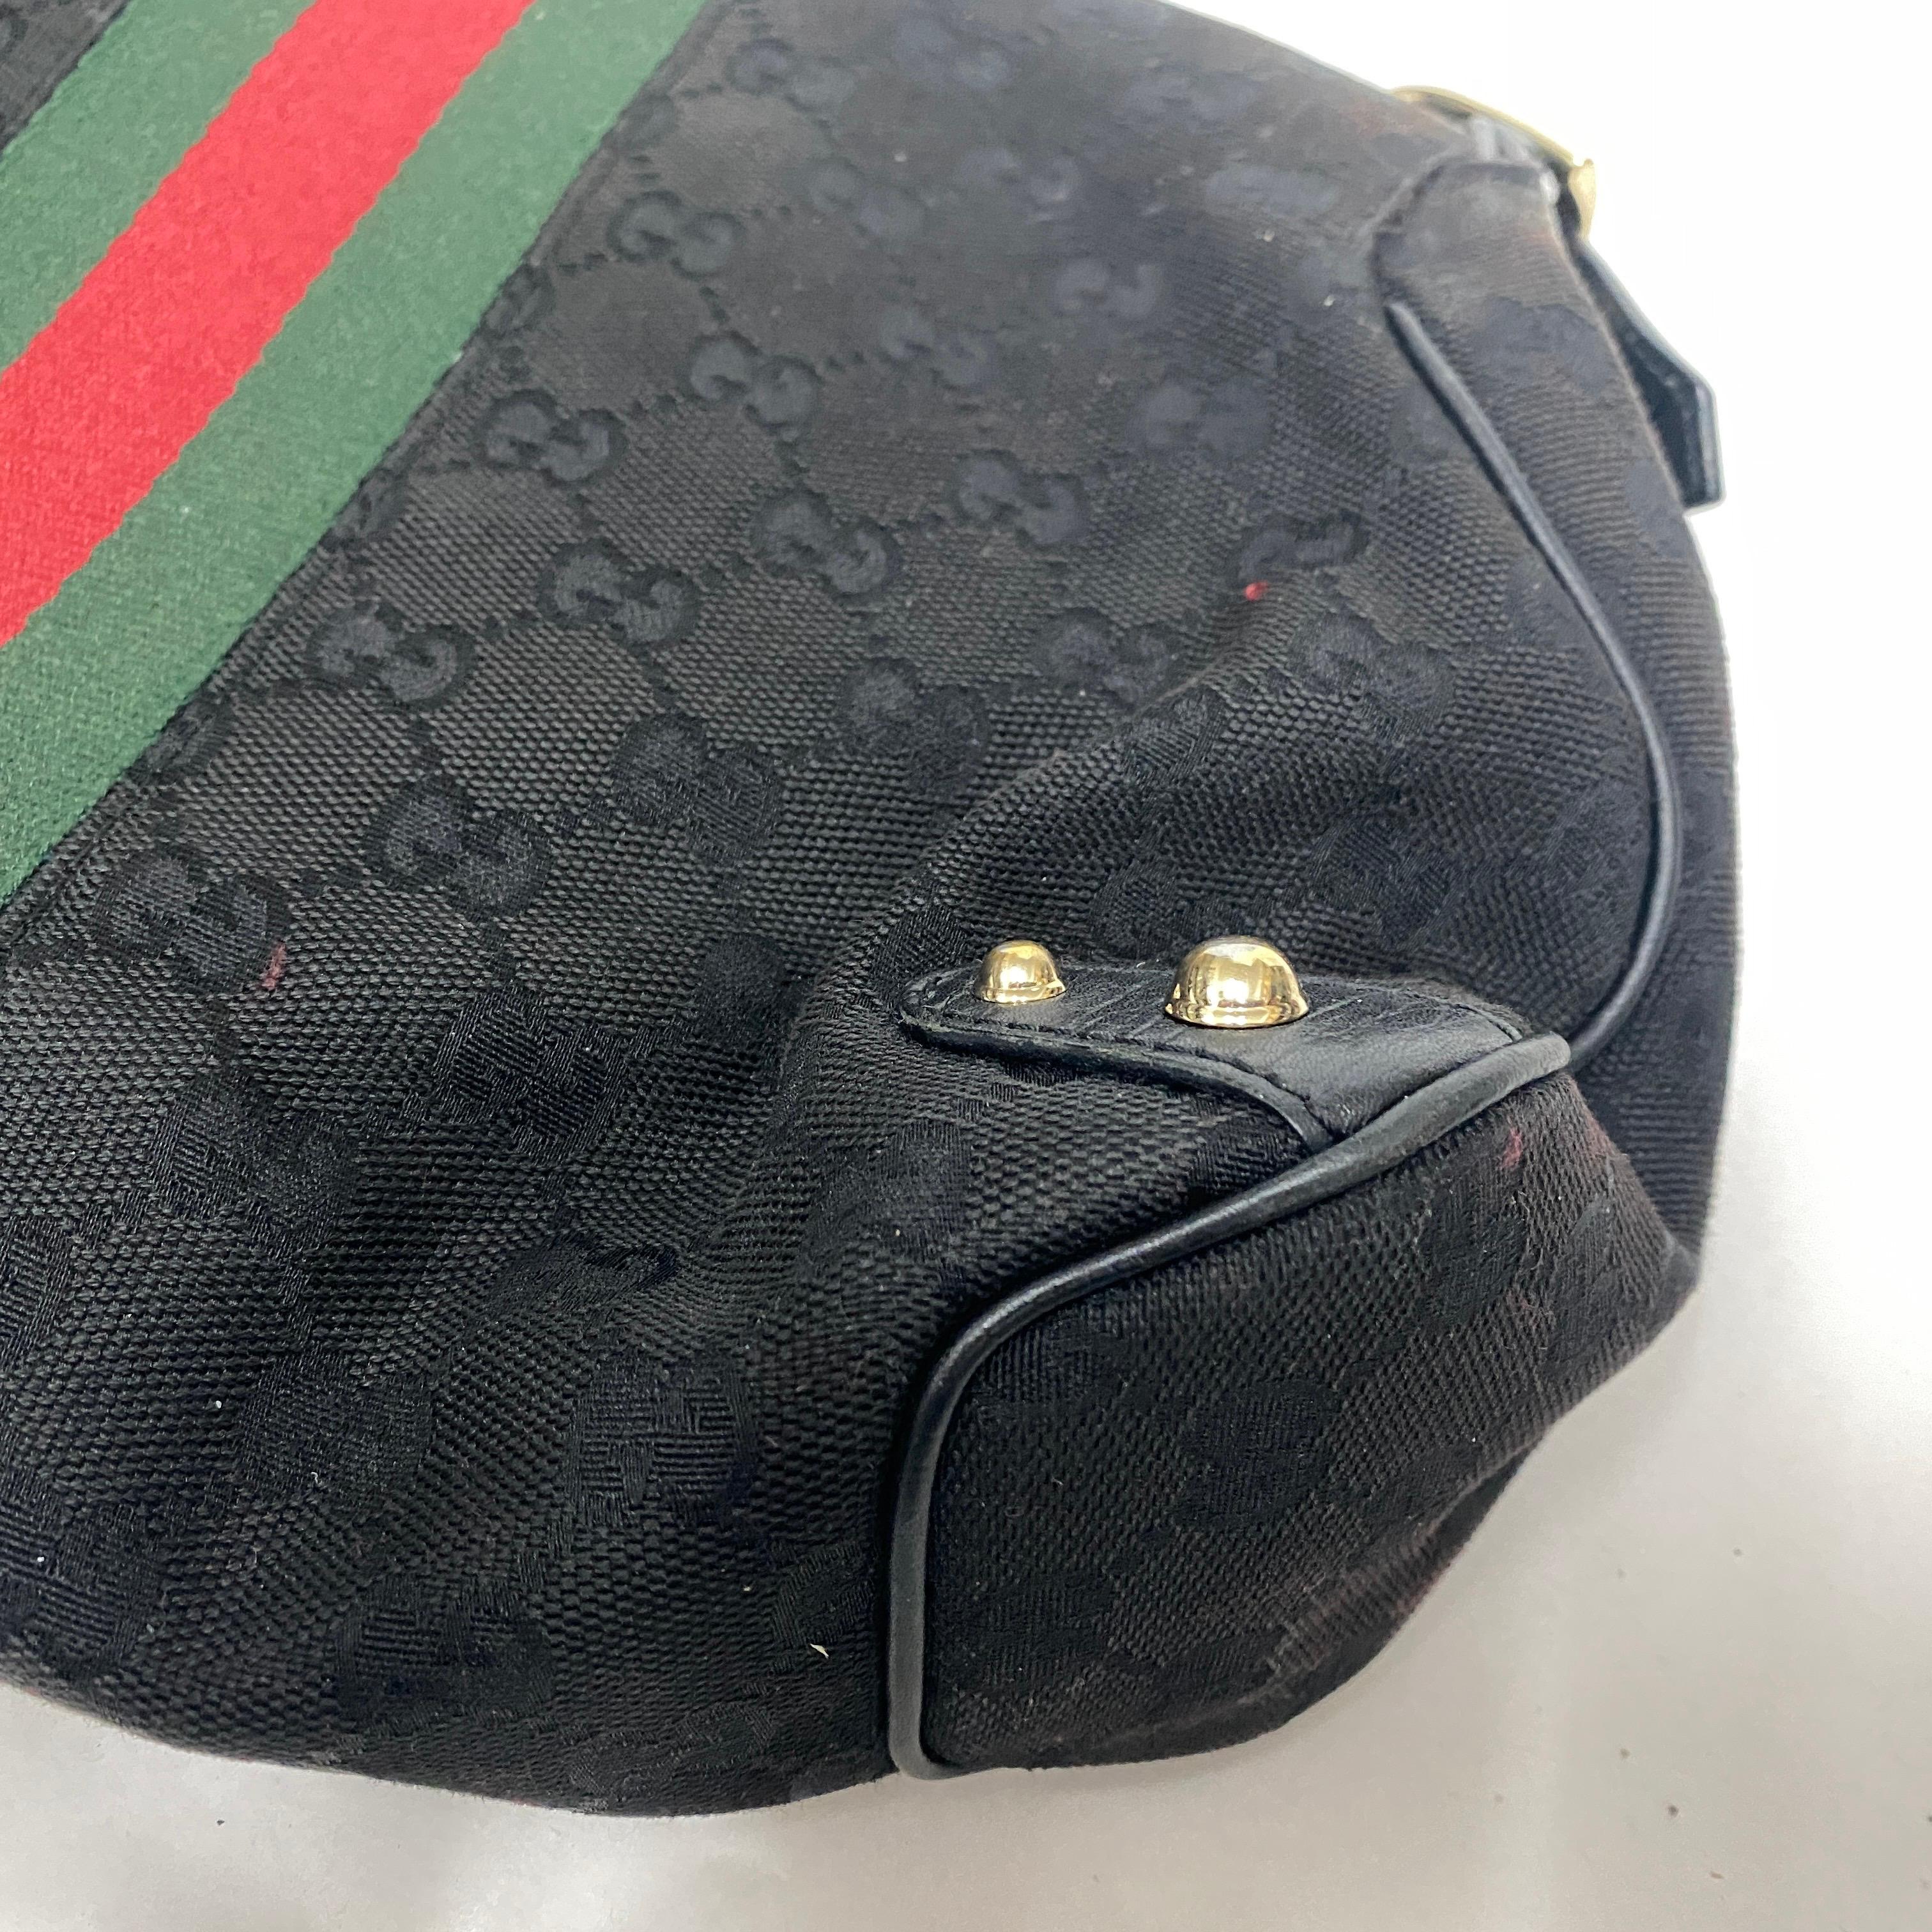 1980s Vintage Black, Red and Green Gucci Handbag 2